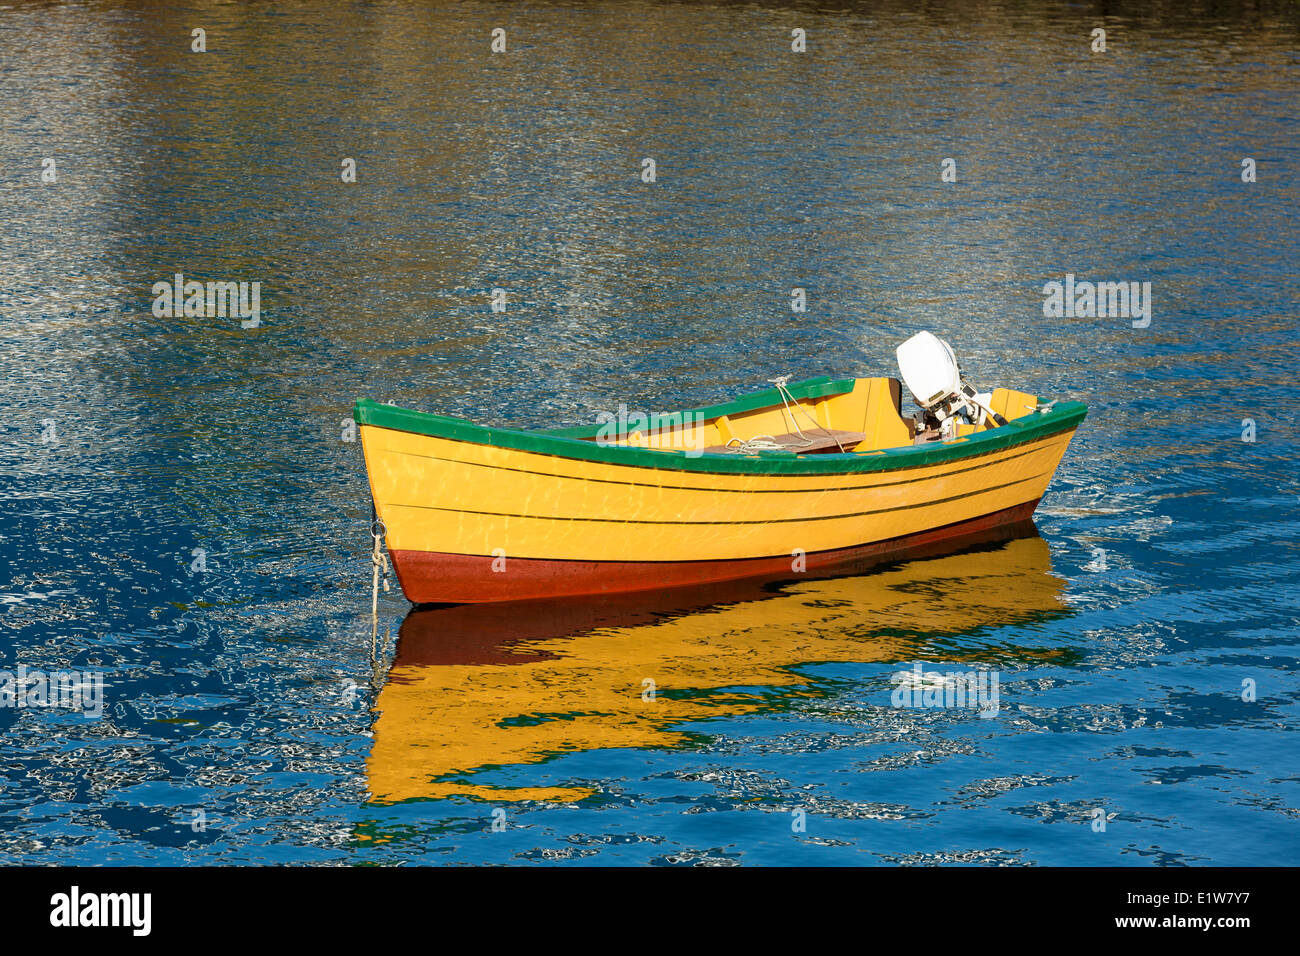 Wooden boat, Lunenburg waterfront, Nova Scotia, Canada Stock Photo